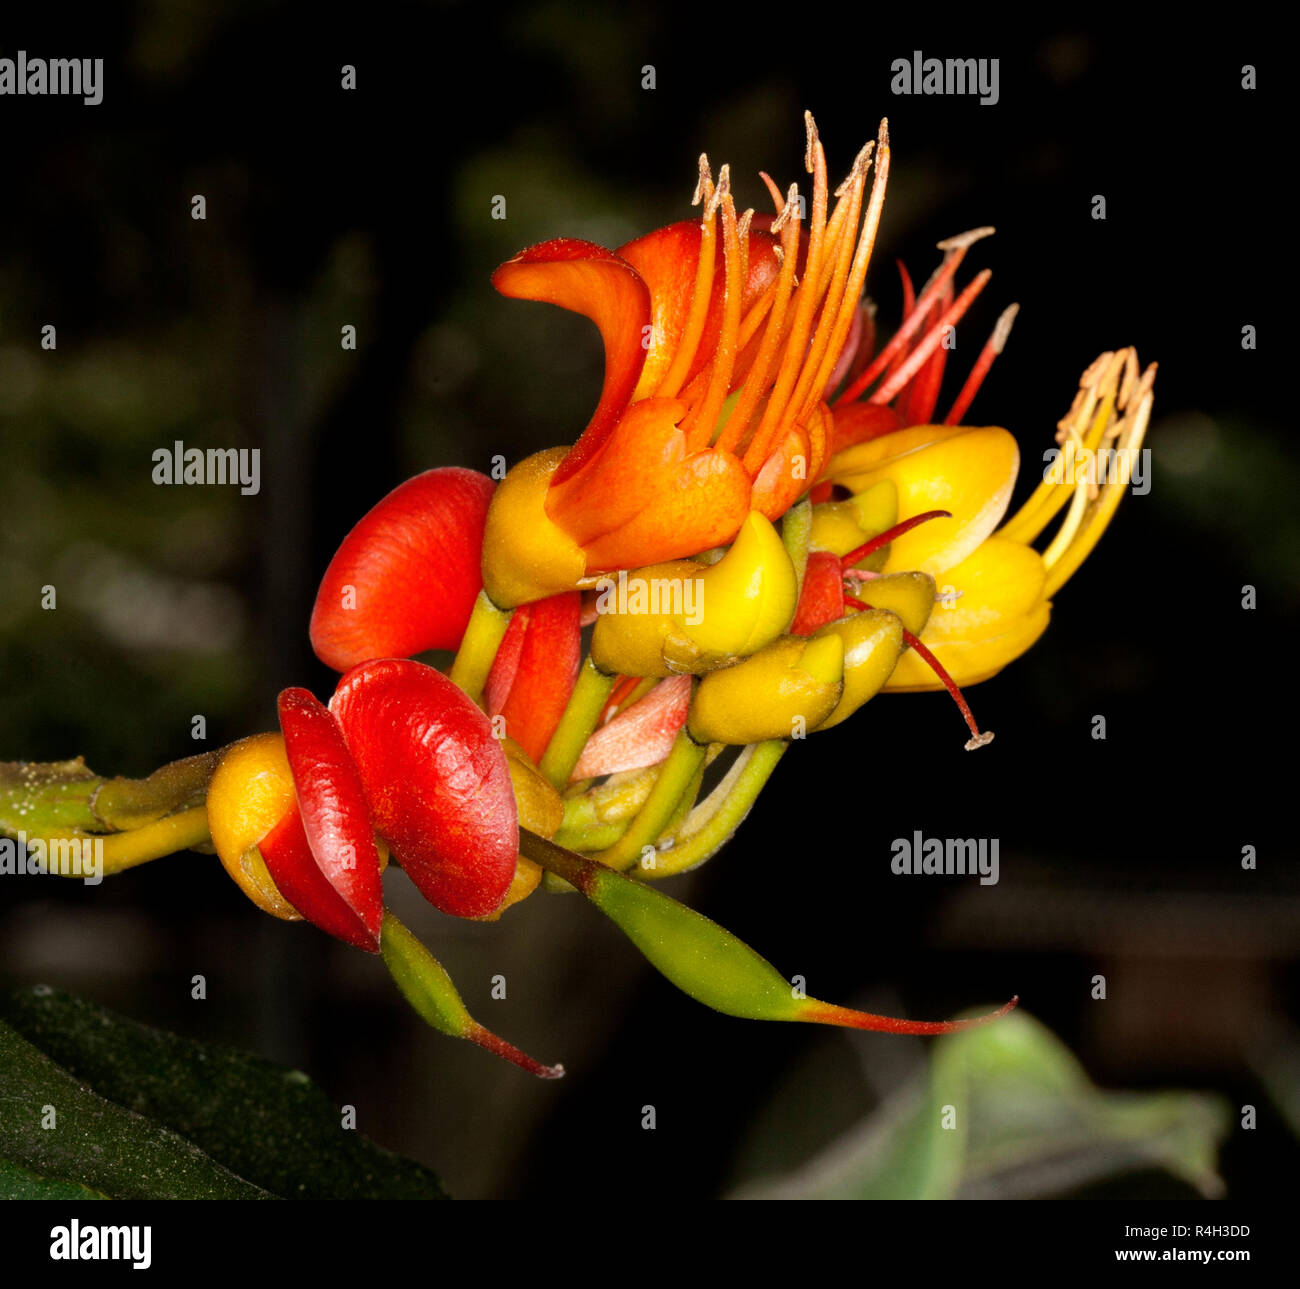 Australian wildflowers, unusual bright red, orange and yellow flowers of black bean tree, Castanospermum australe, against dark background Stock Photo